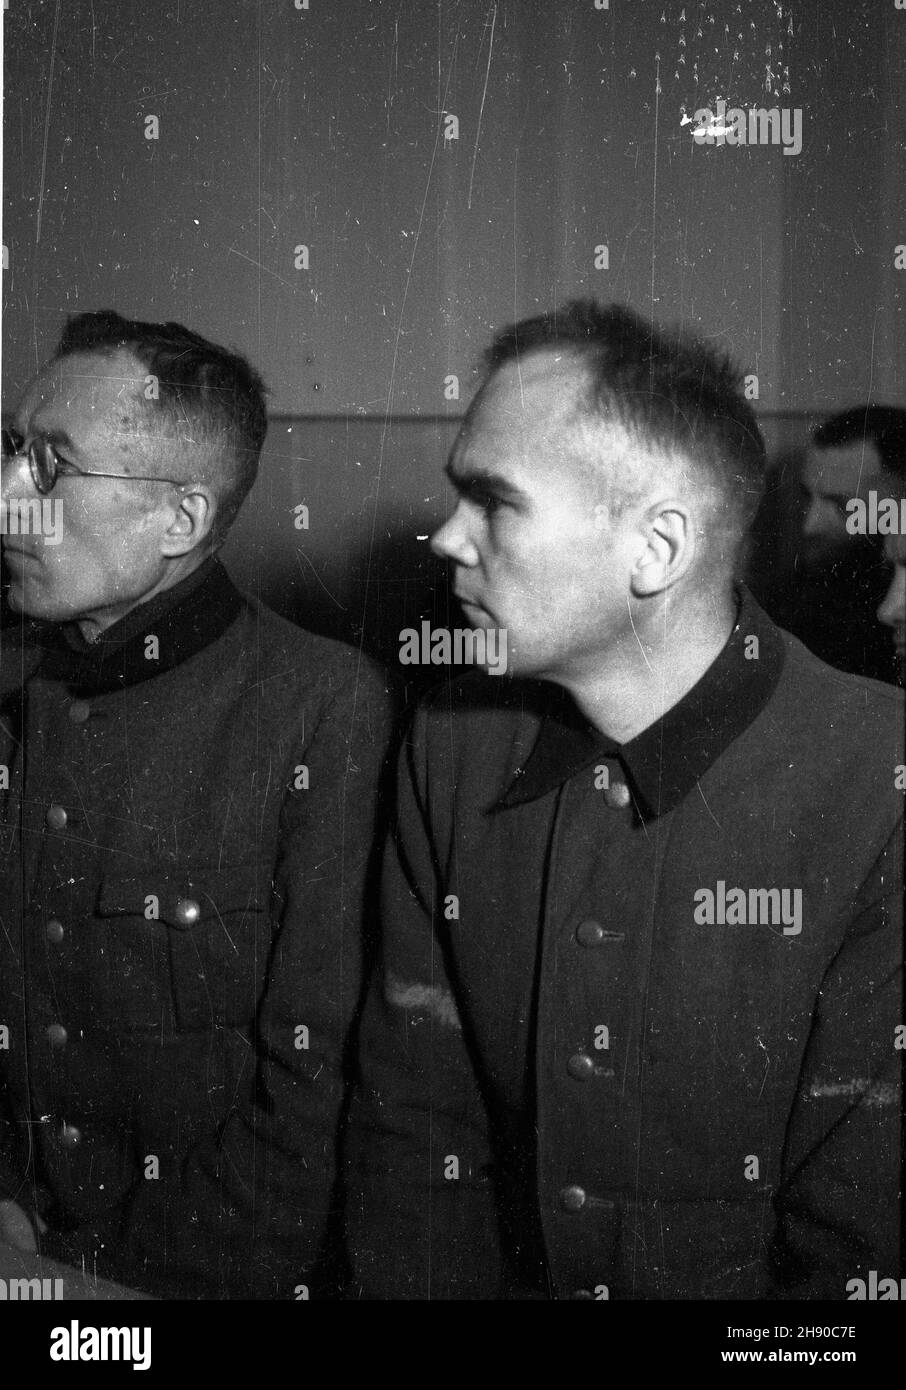 Kraków, 1947. Drugi proces zbrodniarzy oœwiêcimskich przed Najwy¿szym Trybuna³em Narodowym (25.11.1946 - 16.12 1947, og³oszenie wyroku 22.12.1947). Nz. ³awa oskar¿onych. bb/gr  PAP      Cracow, 1947. The 2nd trial of criminals from German Nazi death camp in Auschwitz before the Highest National Tribunal held between Nov. 25, 1946 and December 16, 1947. The verdict was announced on December 22, 1947. Pictured: the defendants' bench.  bb/gr  PAP Stock Photo